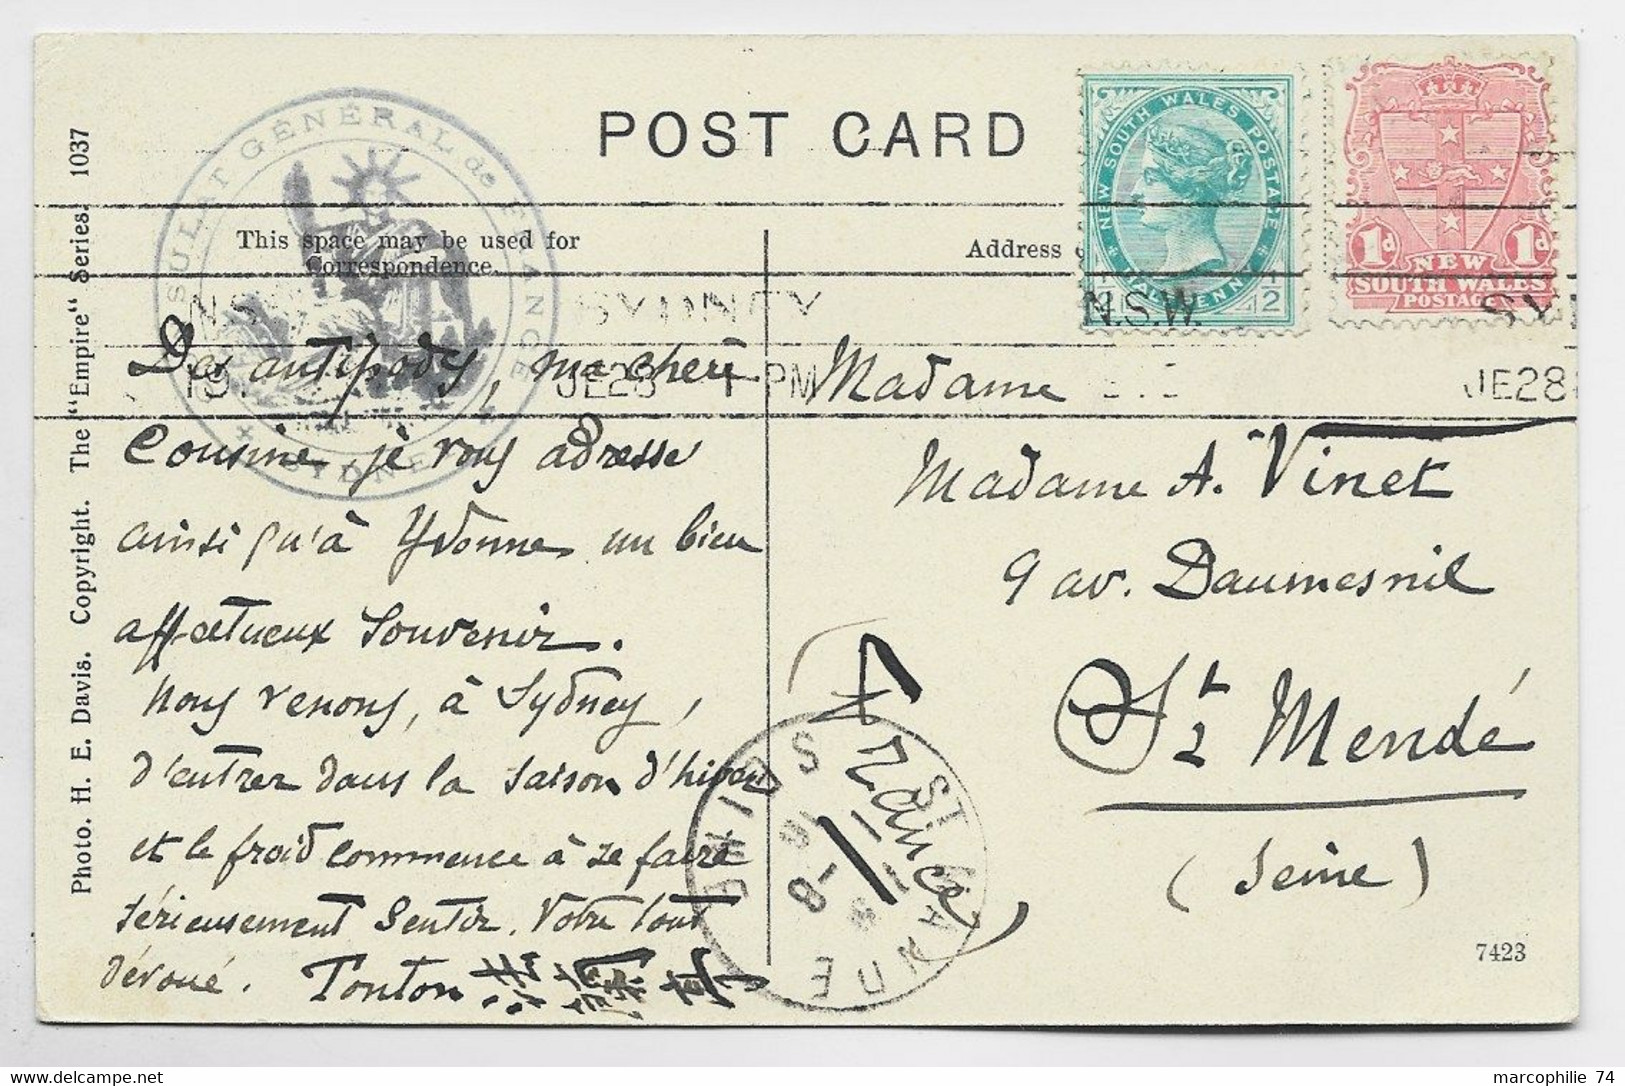 AUSTRALIA SOUTH WALES 1D+1/2C POST CARD SYDNEY 1916+ CONSULAT GENERAL DE FRANCE SYDNEY - Covers & Documents